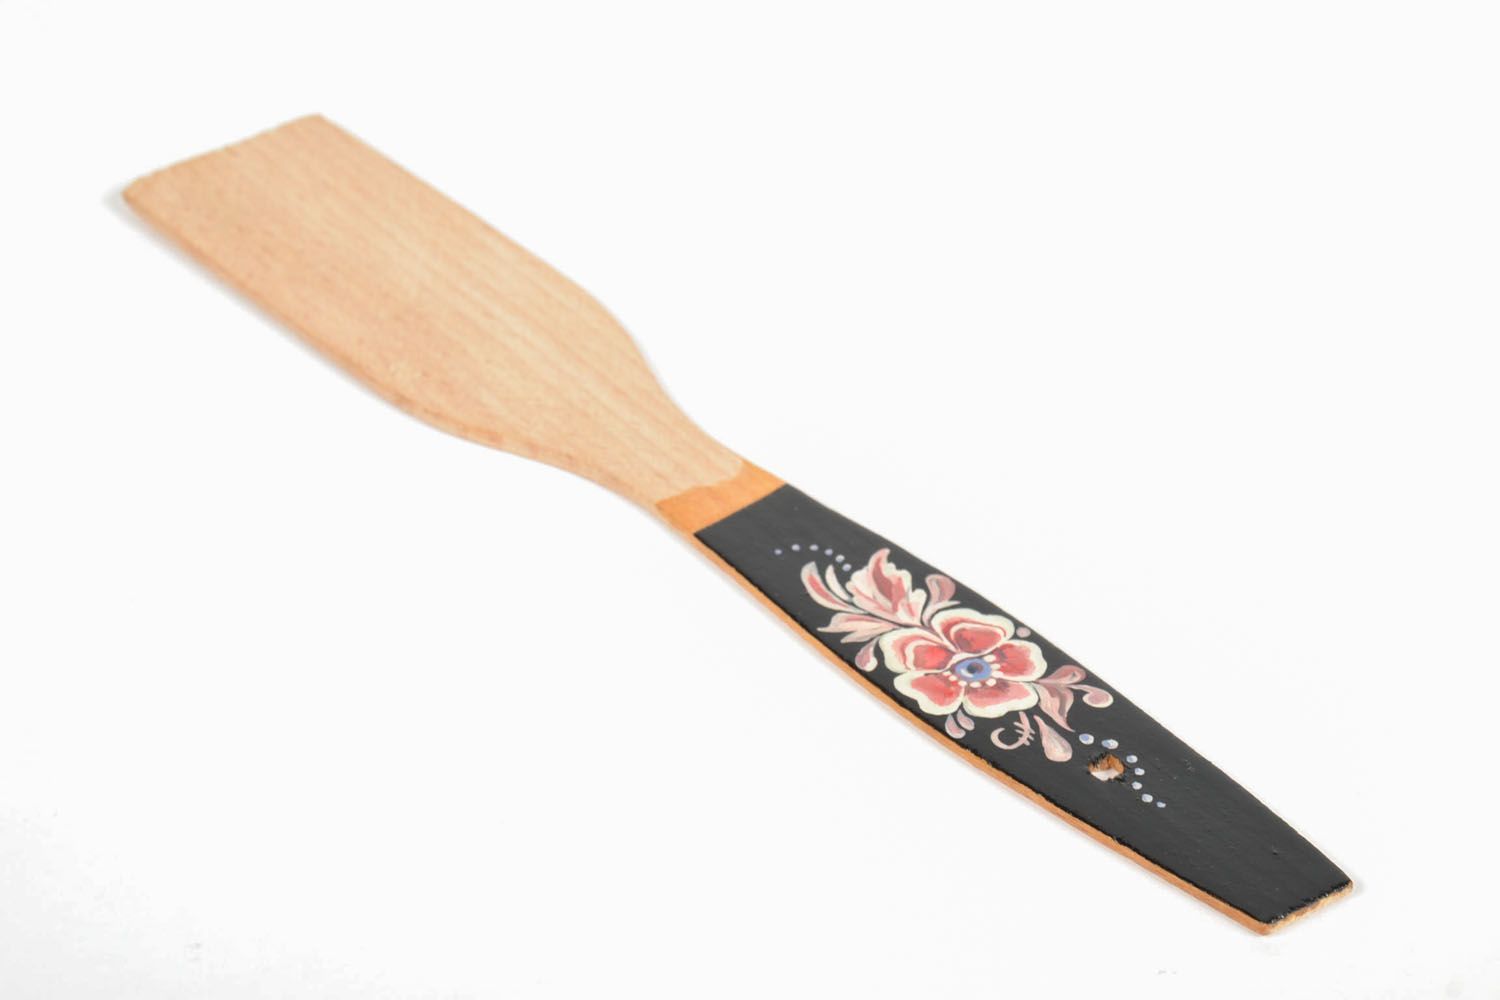 Painted wooden spatula photo 2